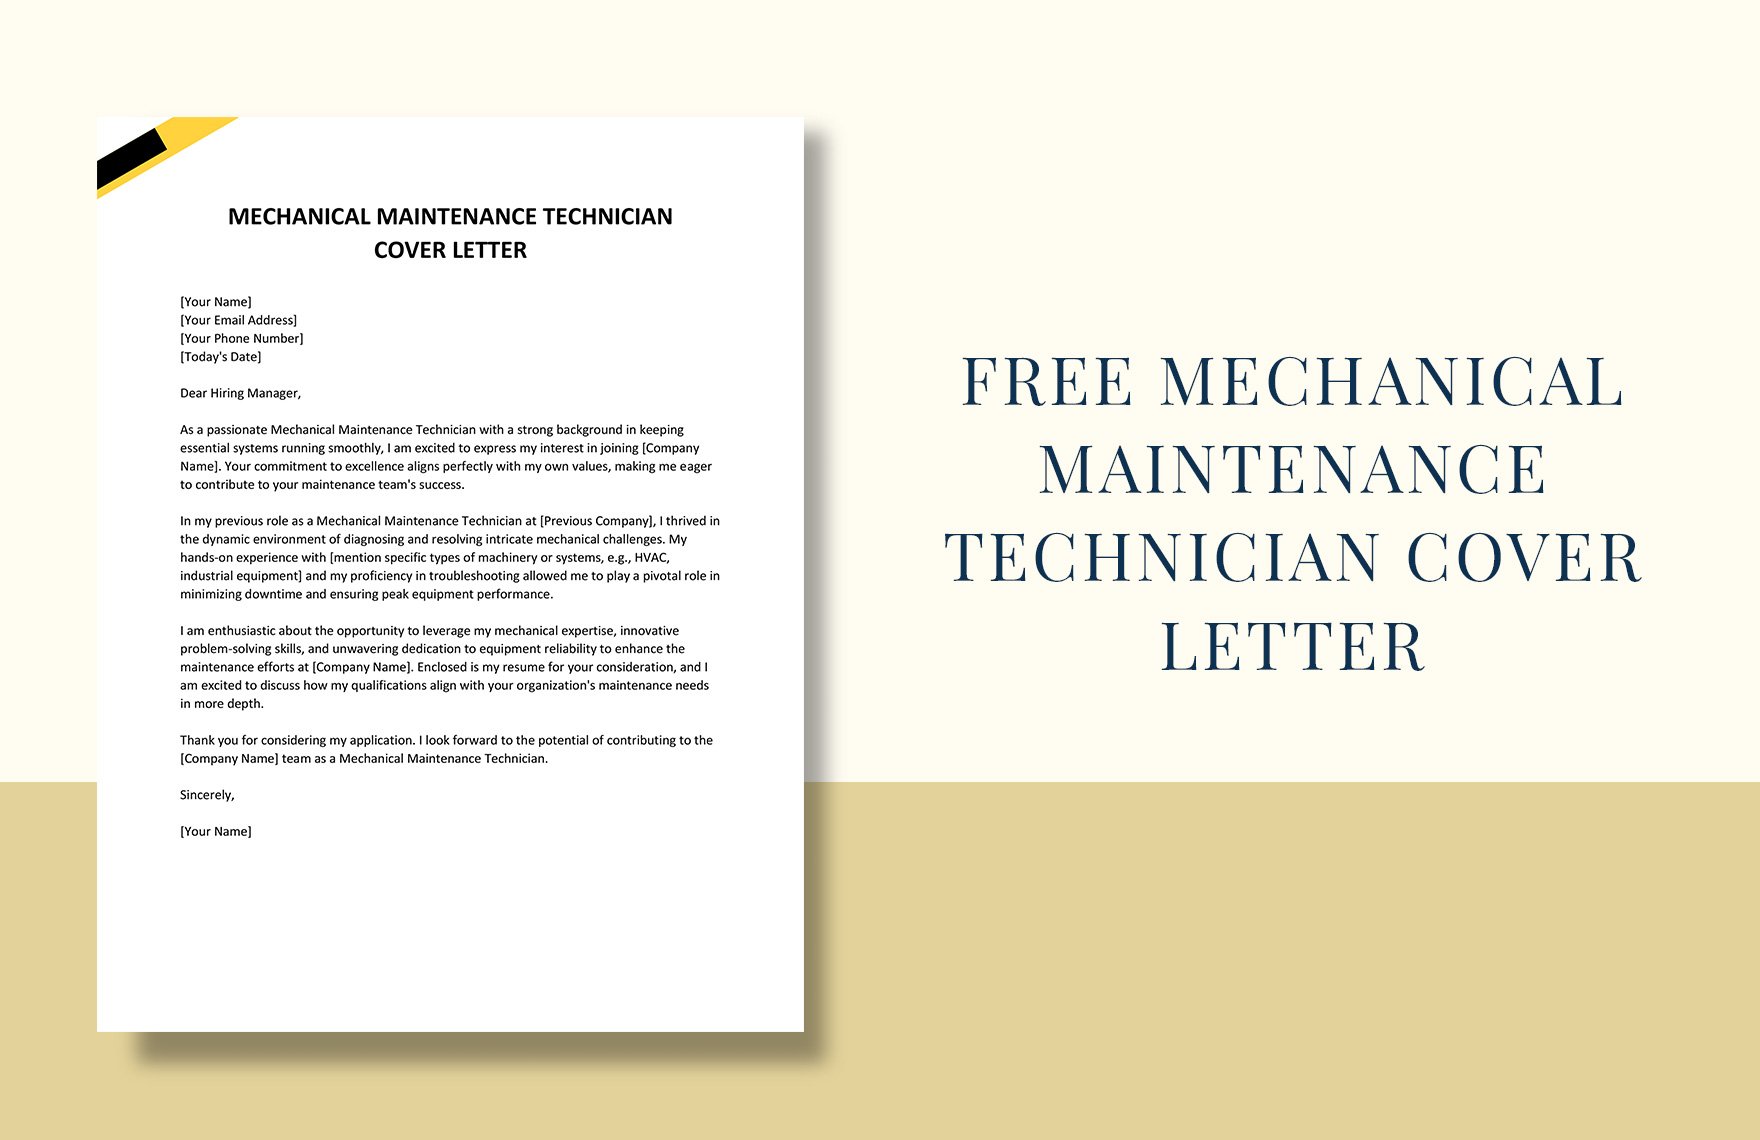 Mechanical Maintenance Technician Cover Letter